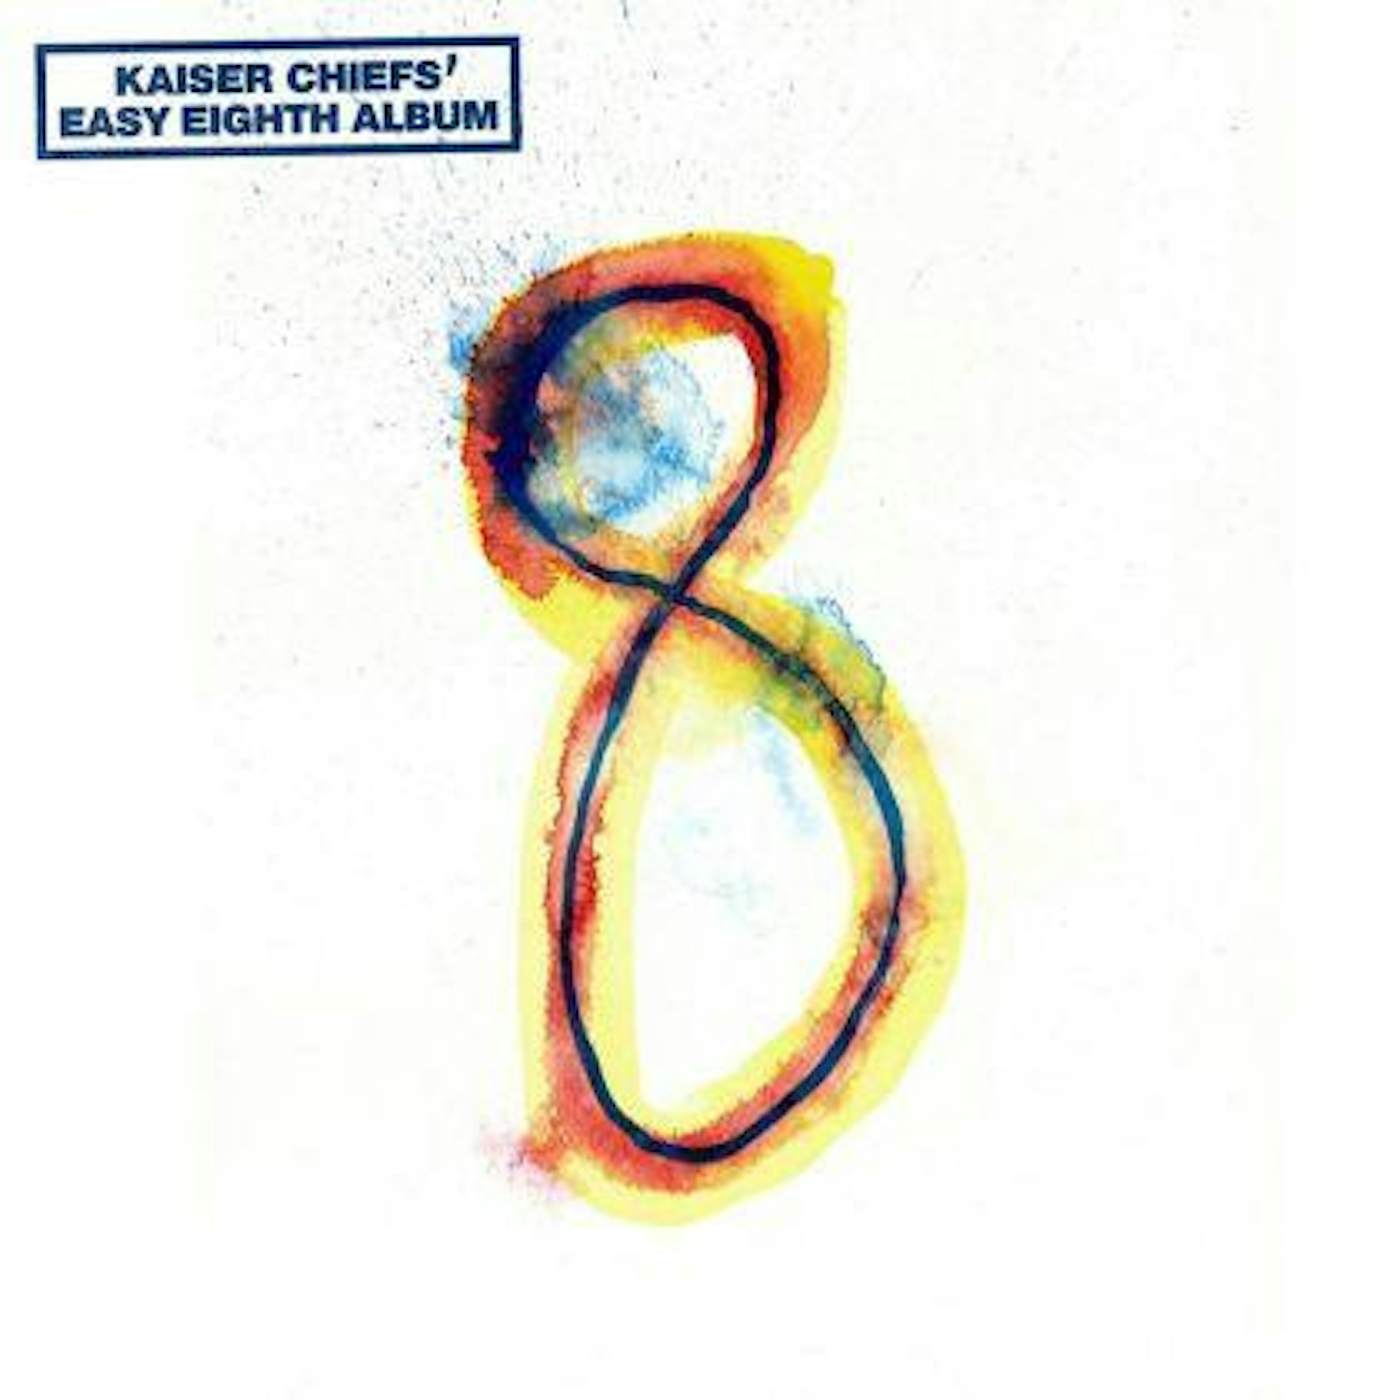 KAISER CHIEFS' EASY EIGHTH ALBUM CD